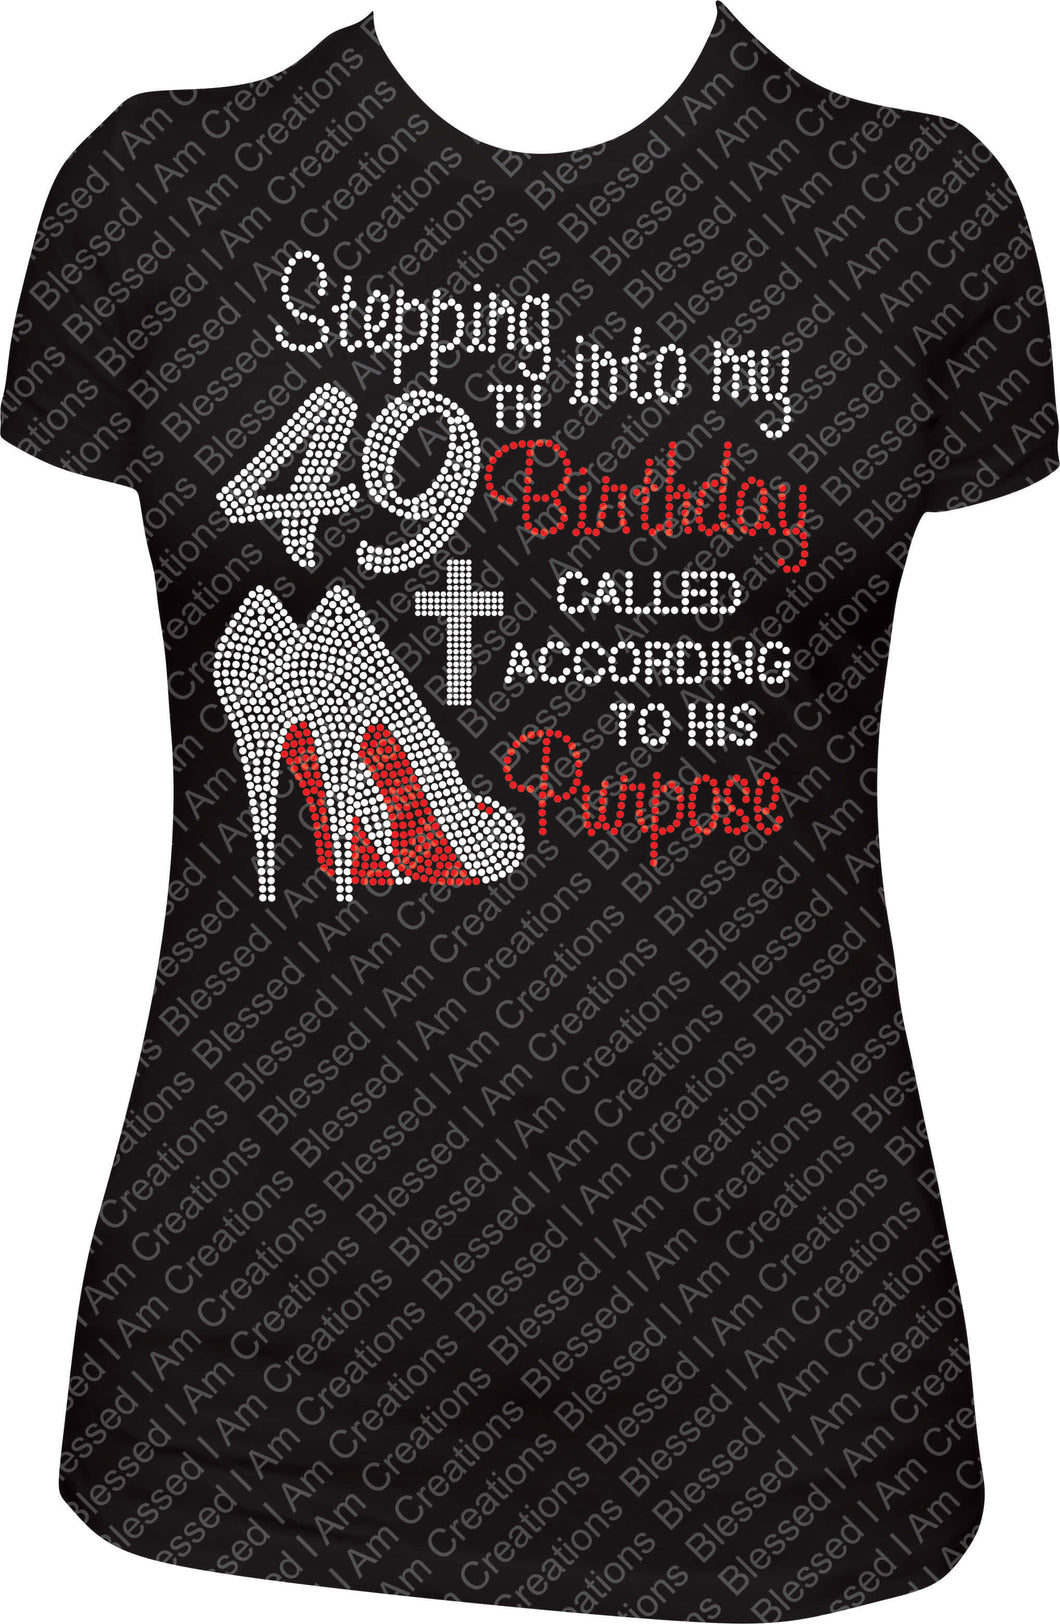 Stepping into my 49th Birthday Called According to His Purpose Rhinestone Birthday Shirt